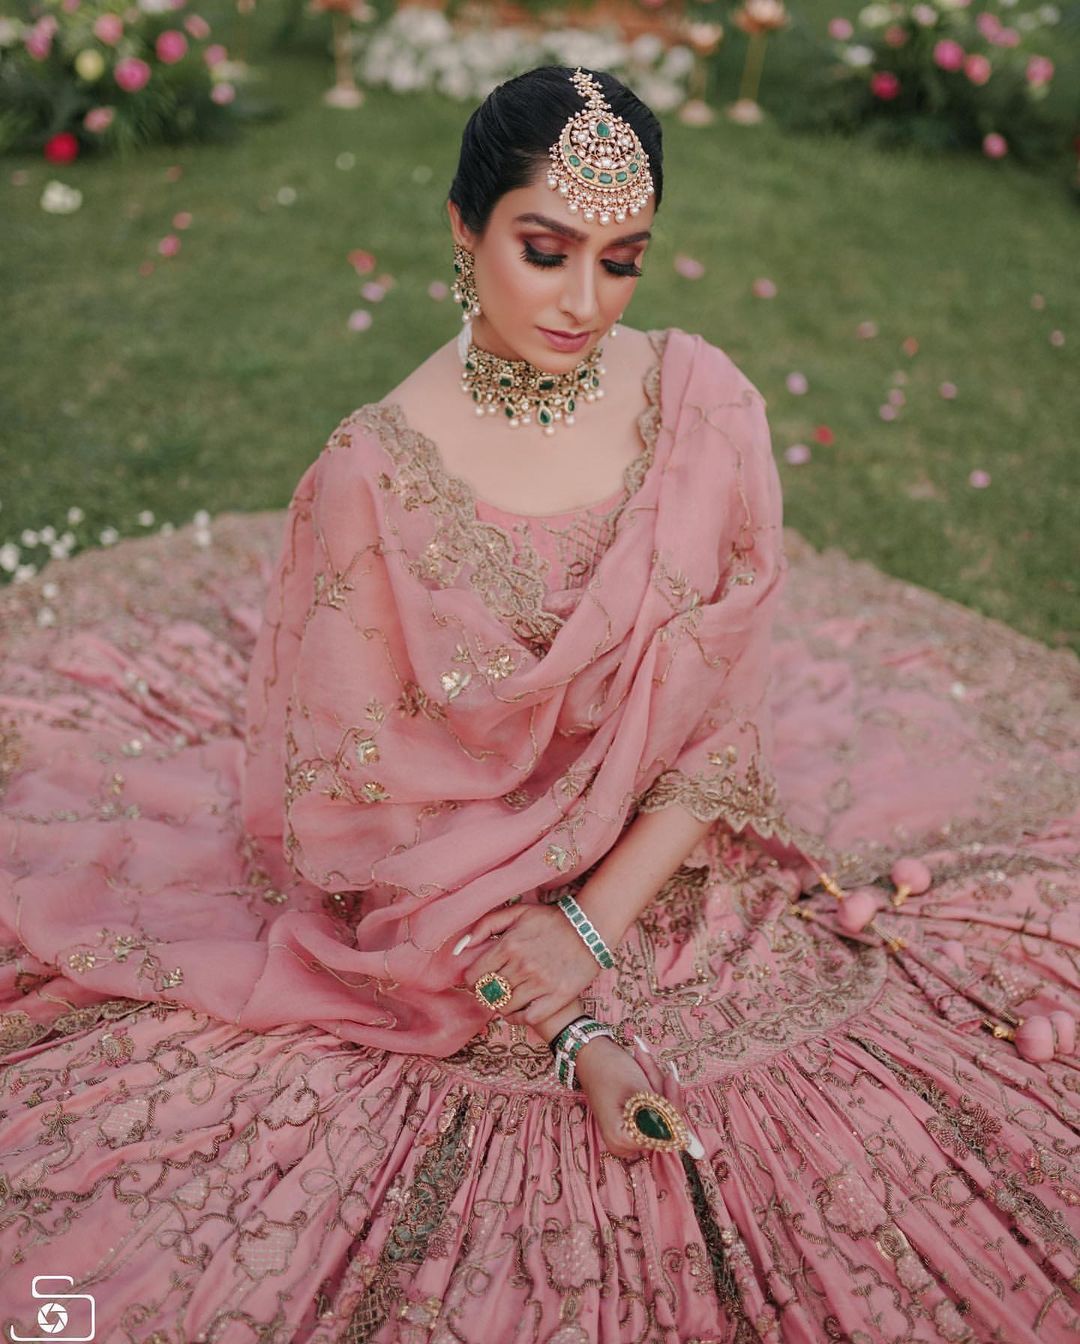 Photo of kiara advani wearing light pink lehenga and contrasting emerald  jewellery on her wedding day